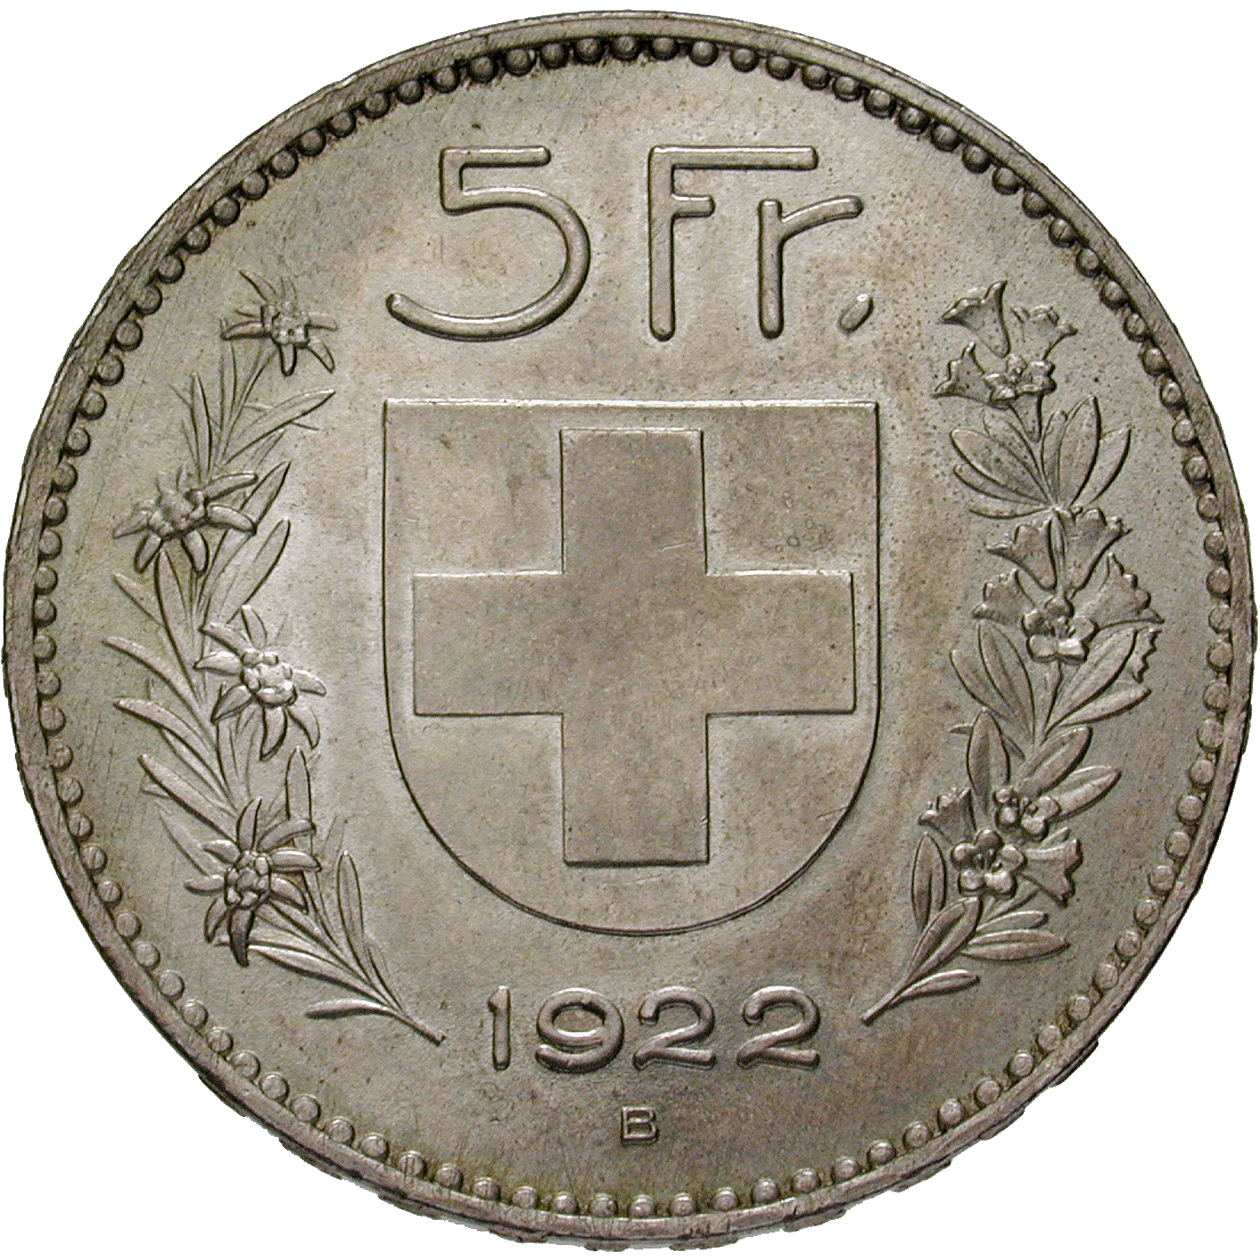 Schweizerische Eidgenossenschaft, 5 Franken 1922 (reverse)